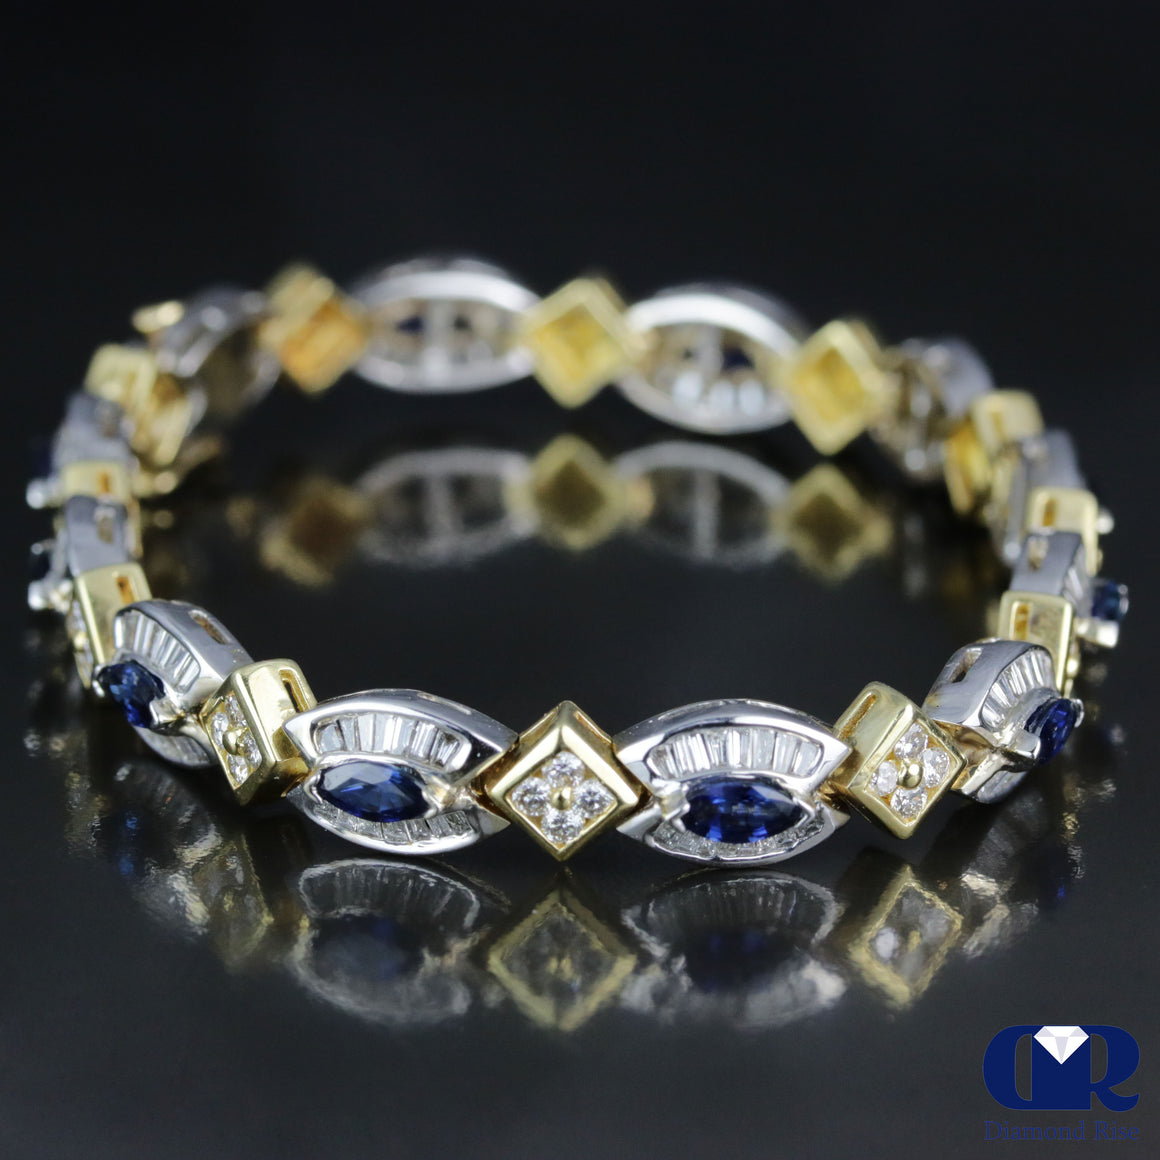 Women's 8.03 Carat Diamond & Sapphire Tennis Bracelet In 14K White & Yellow Gold - Diamond Rise Jewelry